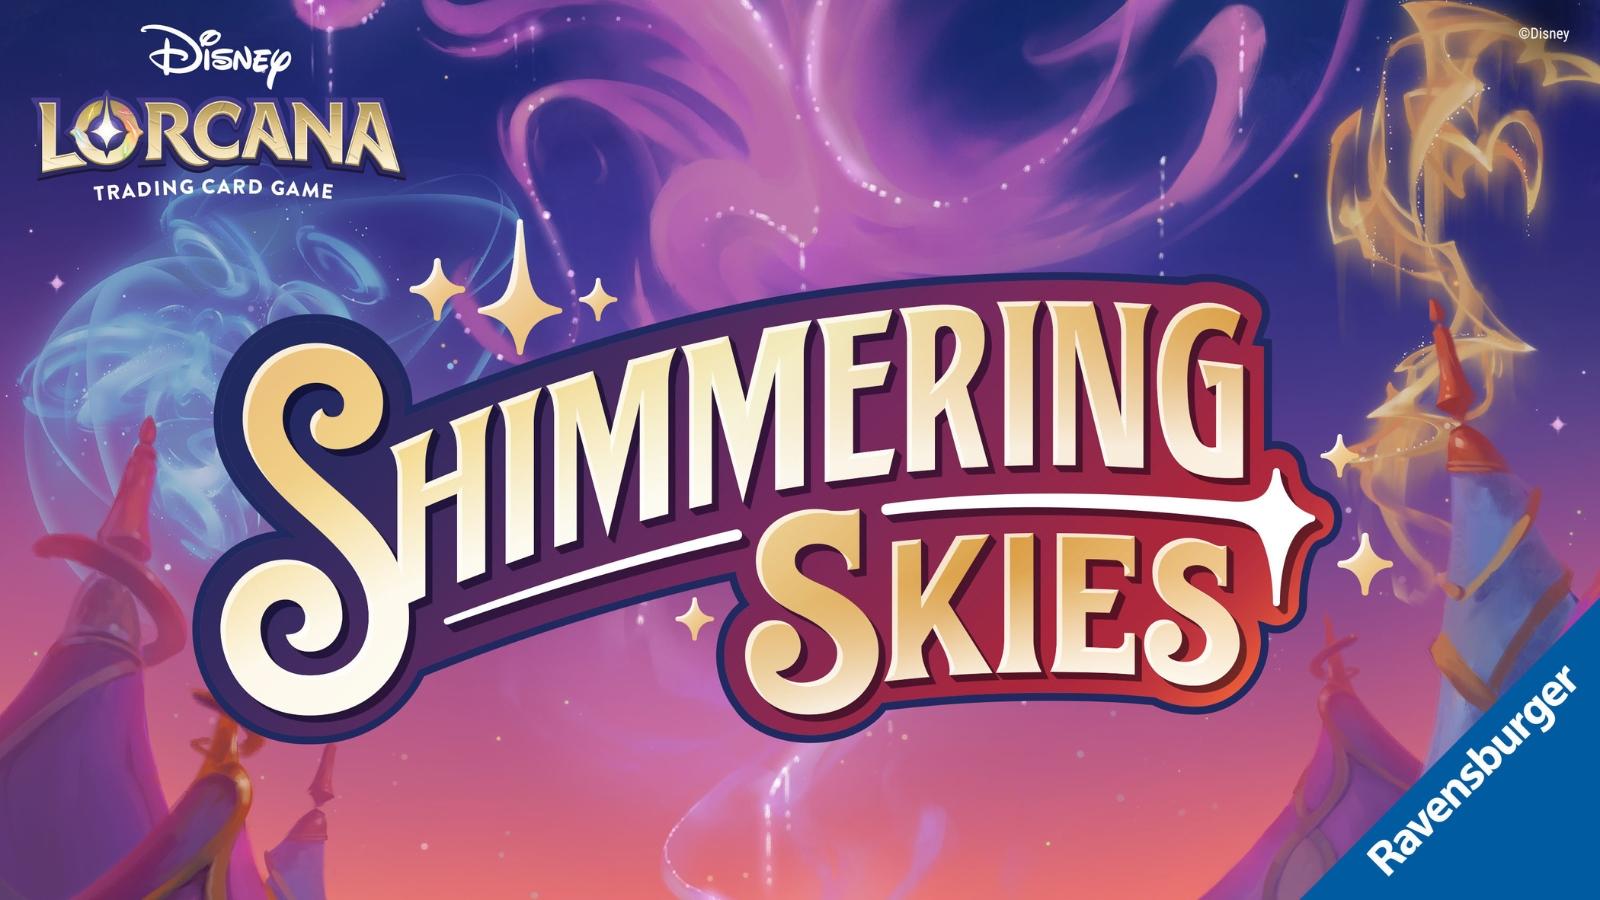 Disney Lorcana Shimmering Skies Set 5 Banner